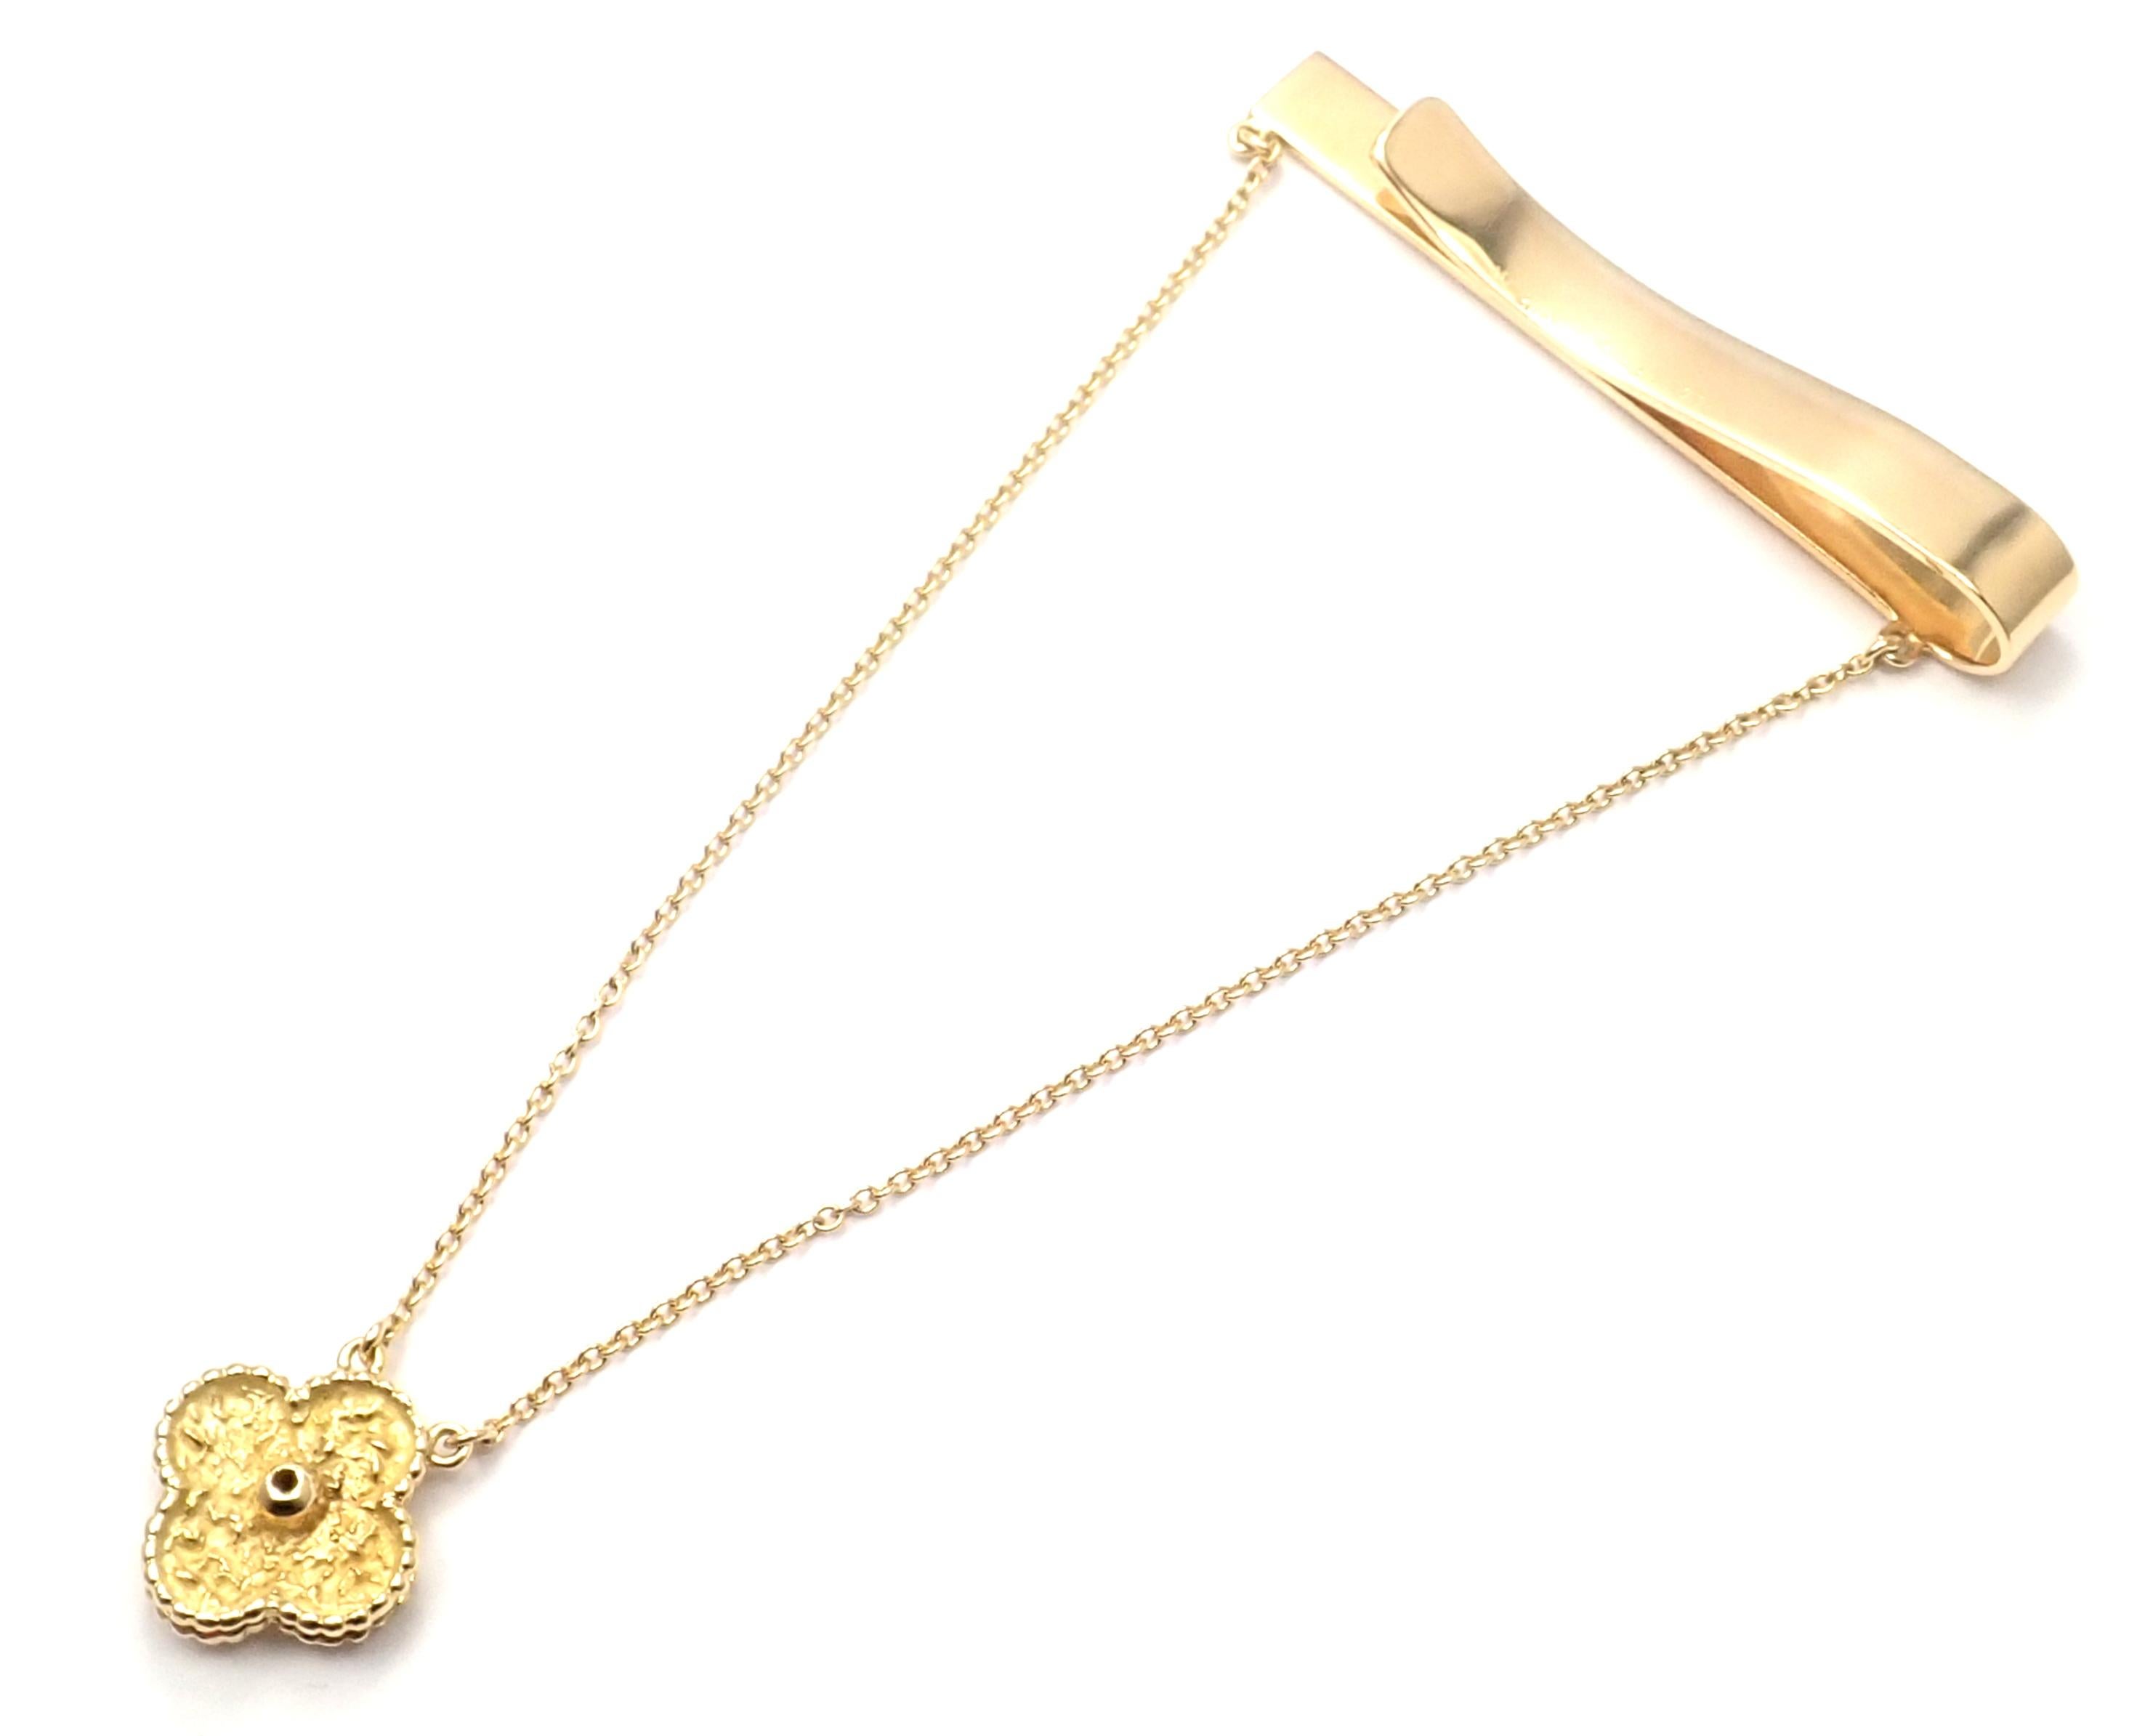 gold tie clip with diamond